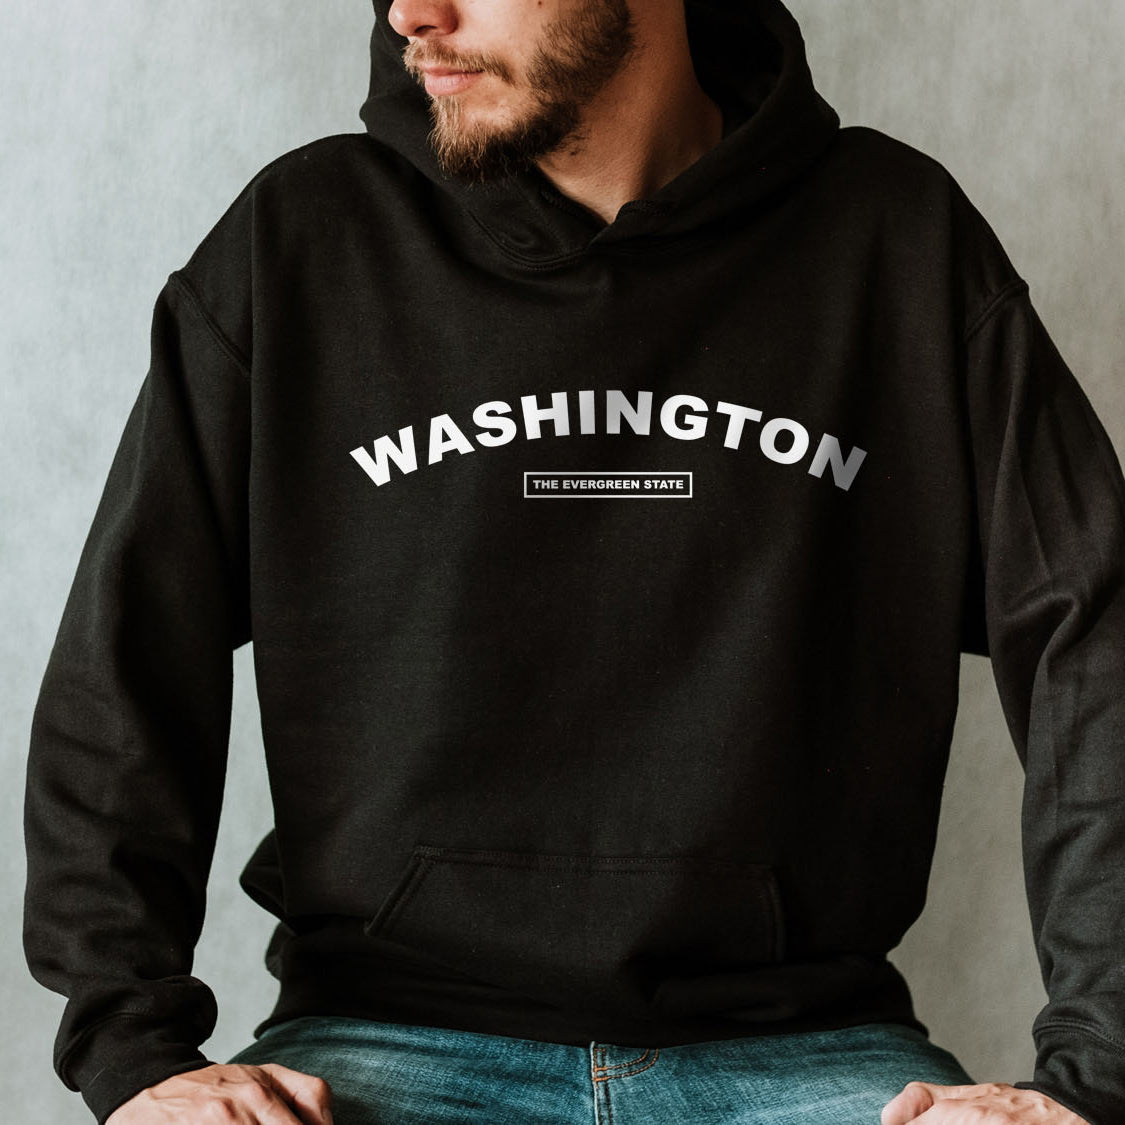 Washington The Evergreen State Hoodie - United States Name & Slogan Minimal Design Printed Hoodie